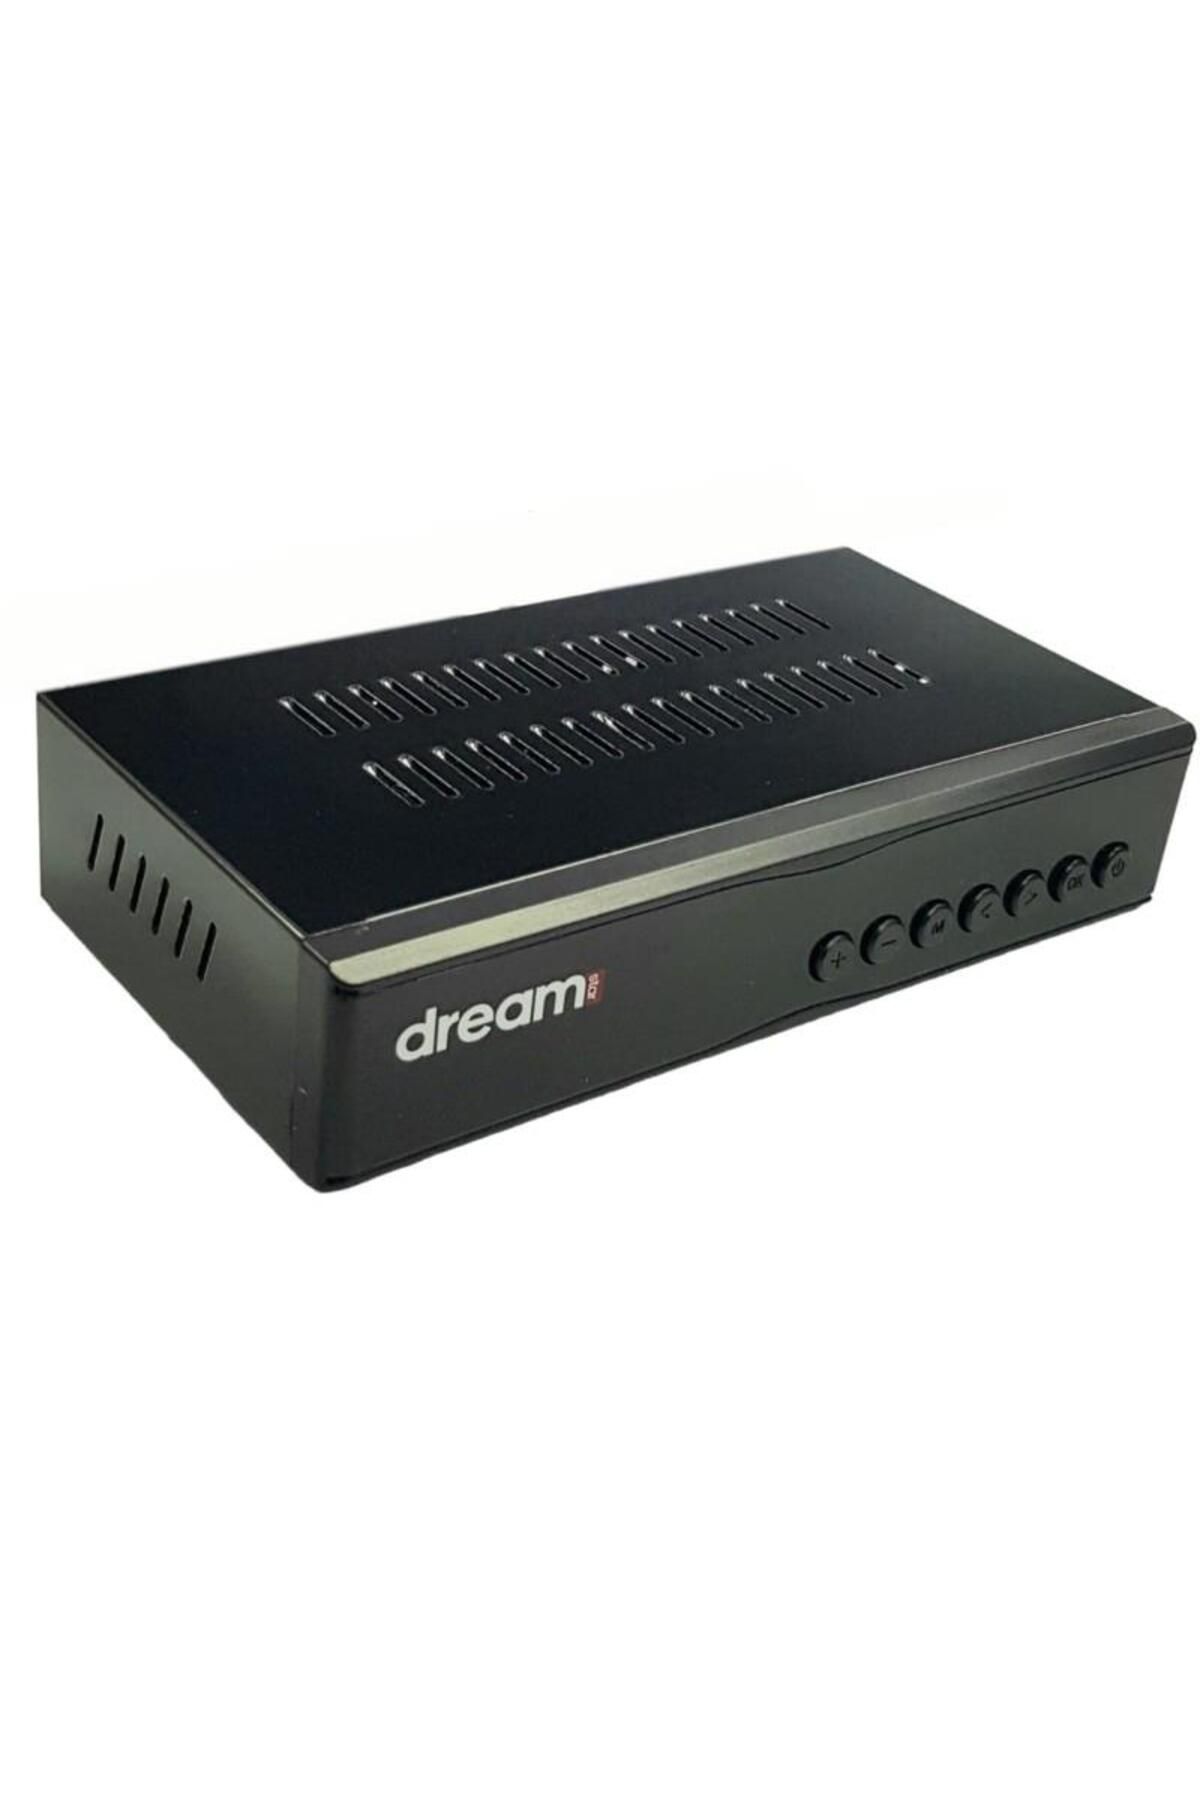 Dreamstar DS-4000 Full HD Uydu Alıcı TKGS